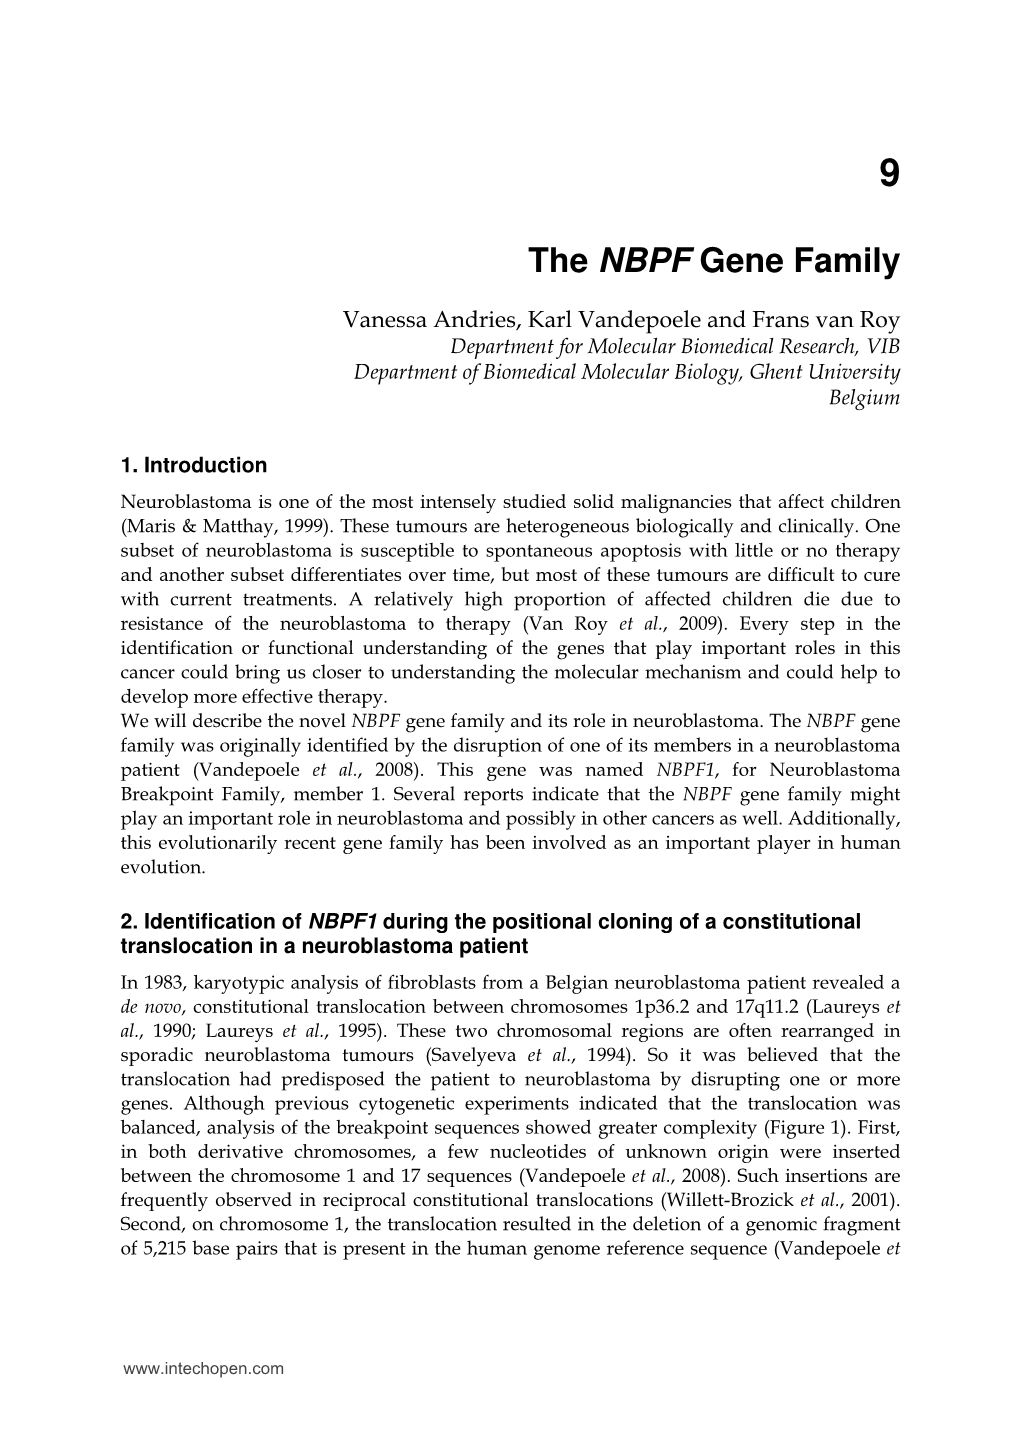 The NBPF Gene Family